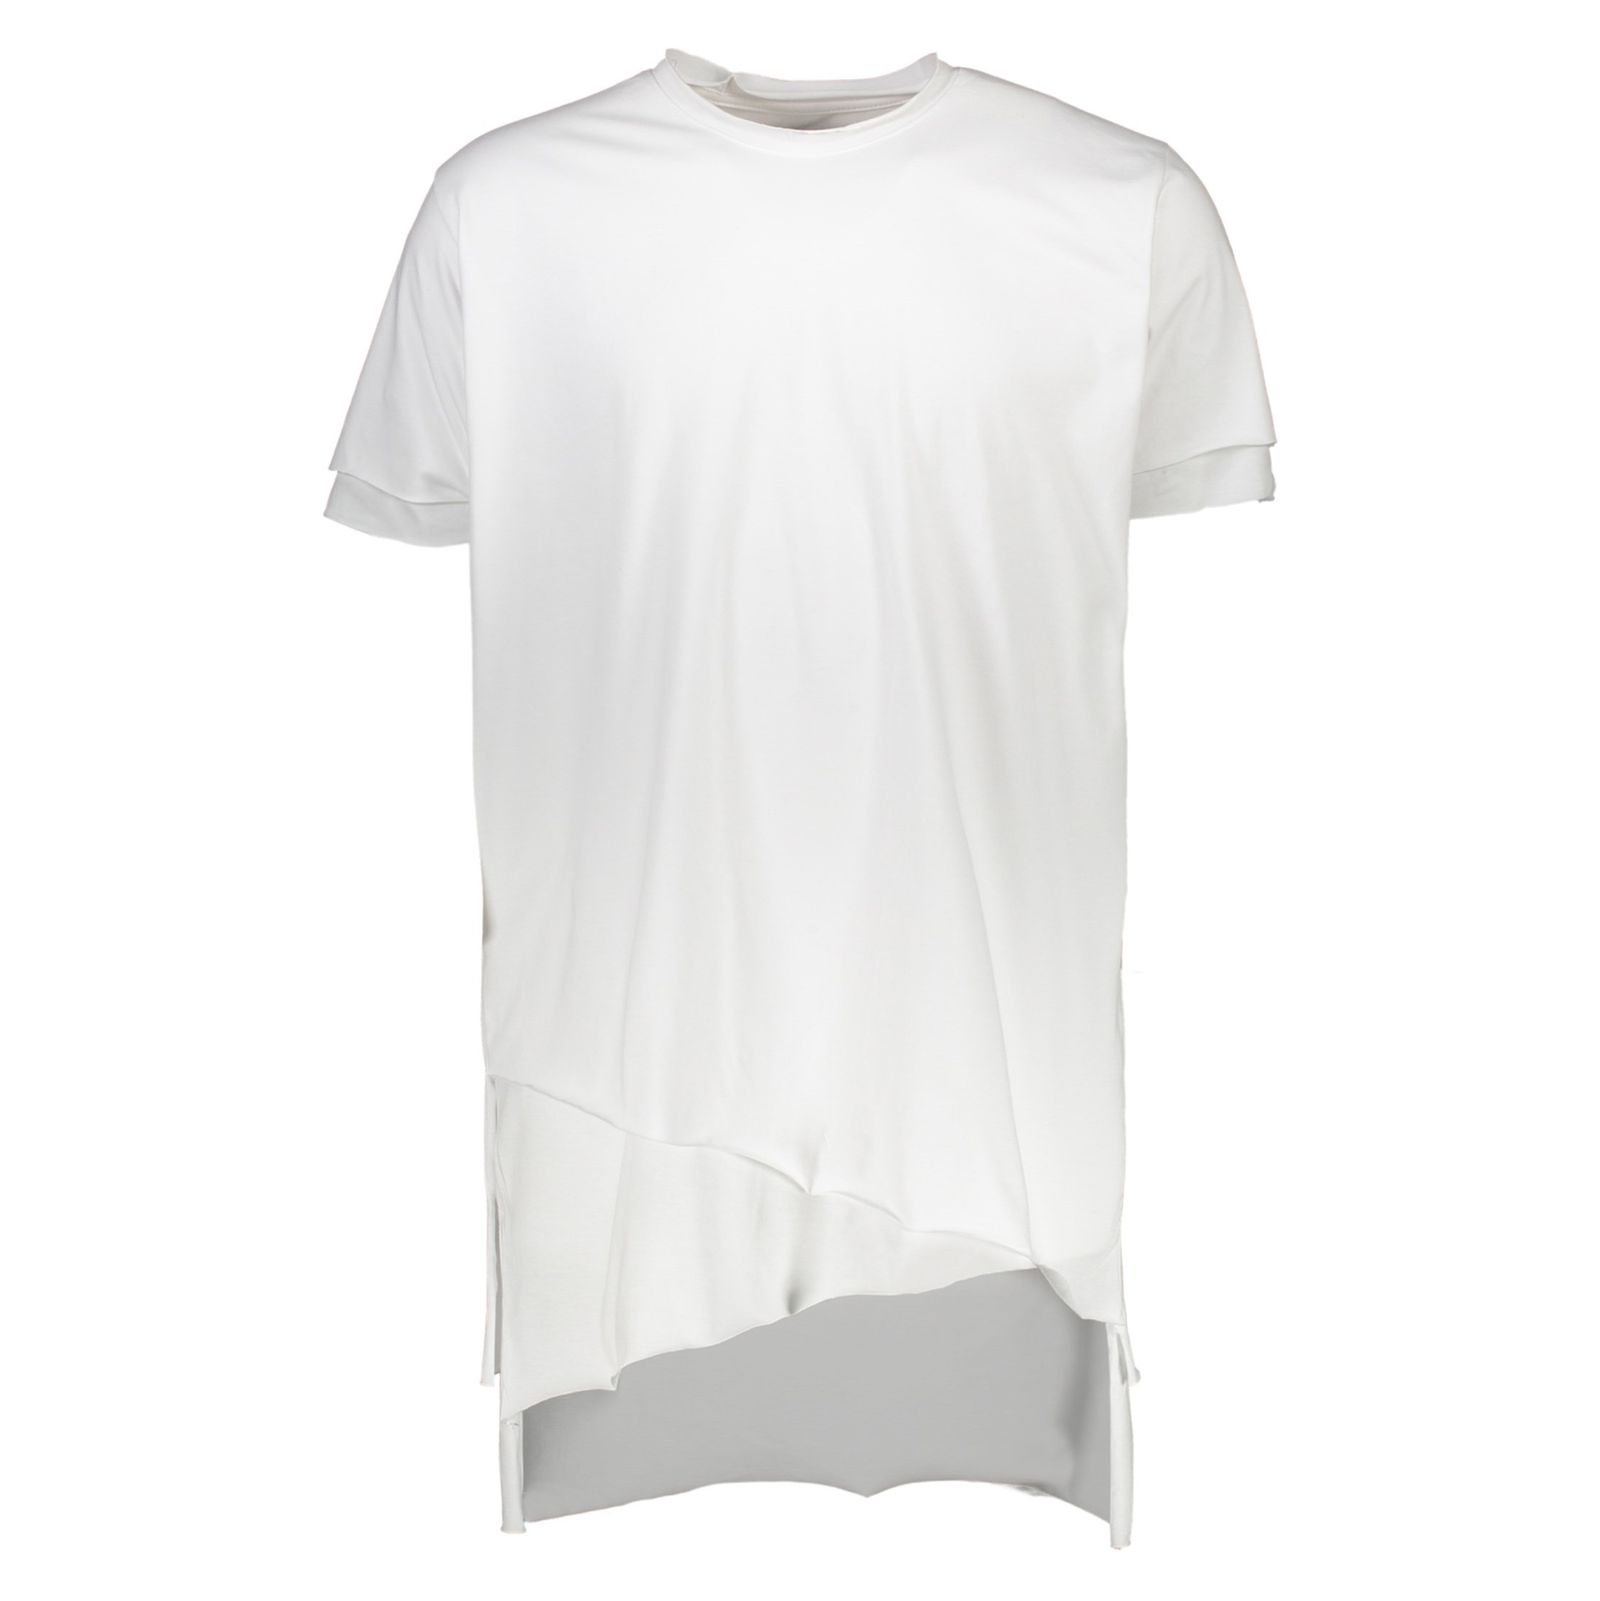 تی شرت ویسکوز یقه گرد مردانه Double Layer - یونیتی - سفيد - 2